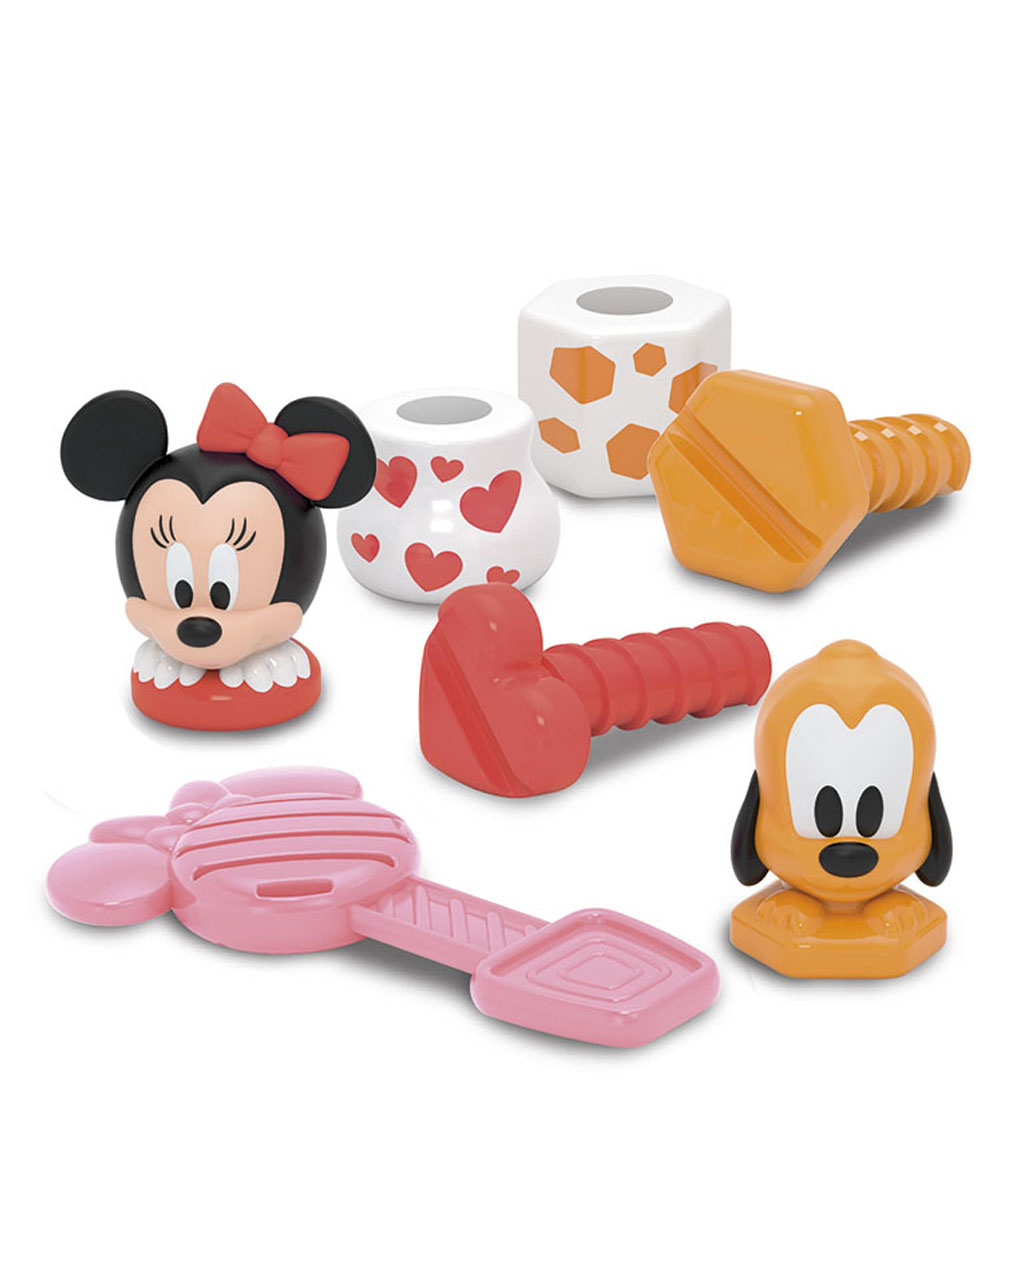 Disney baby minnie build & play - baby clementoni - Baby Clementoni